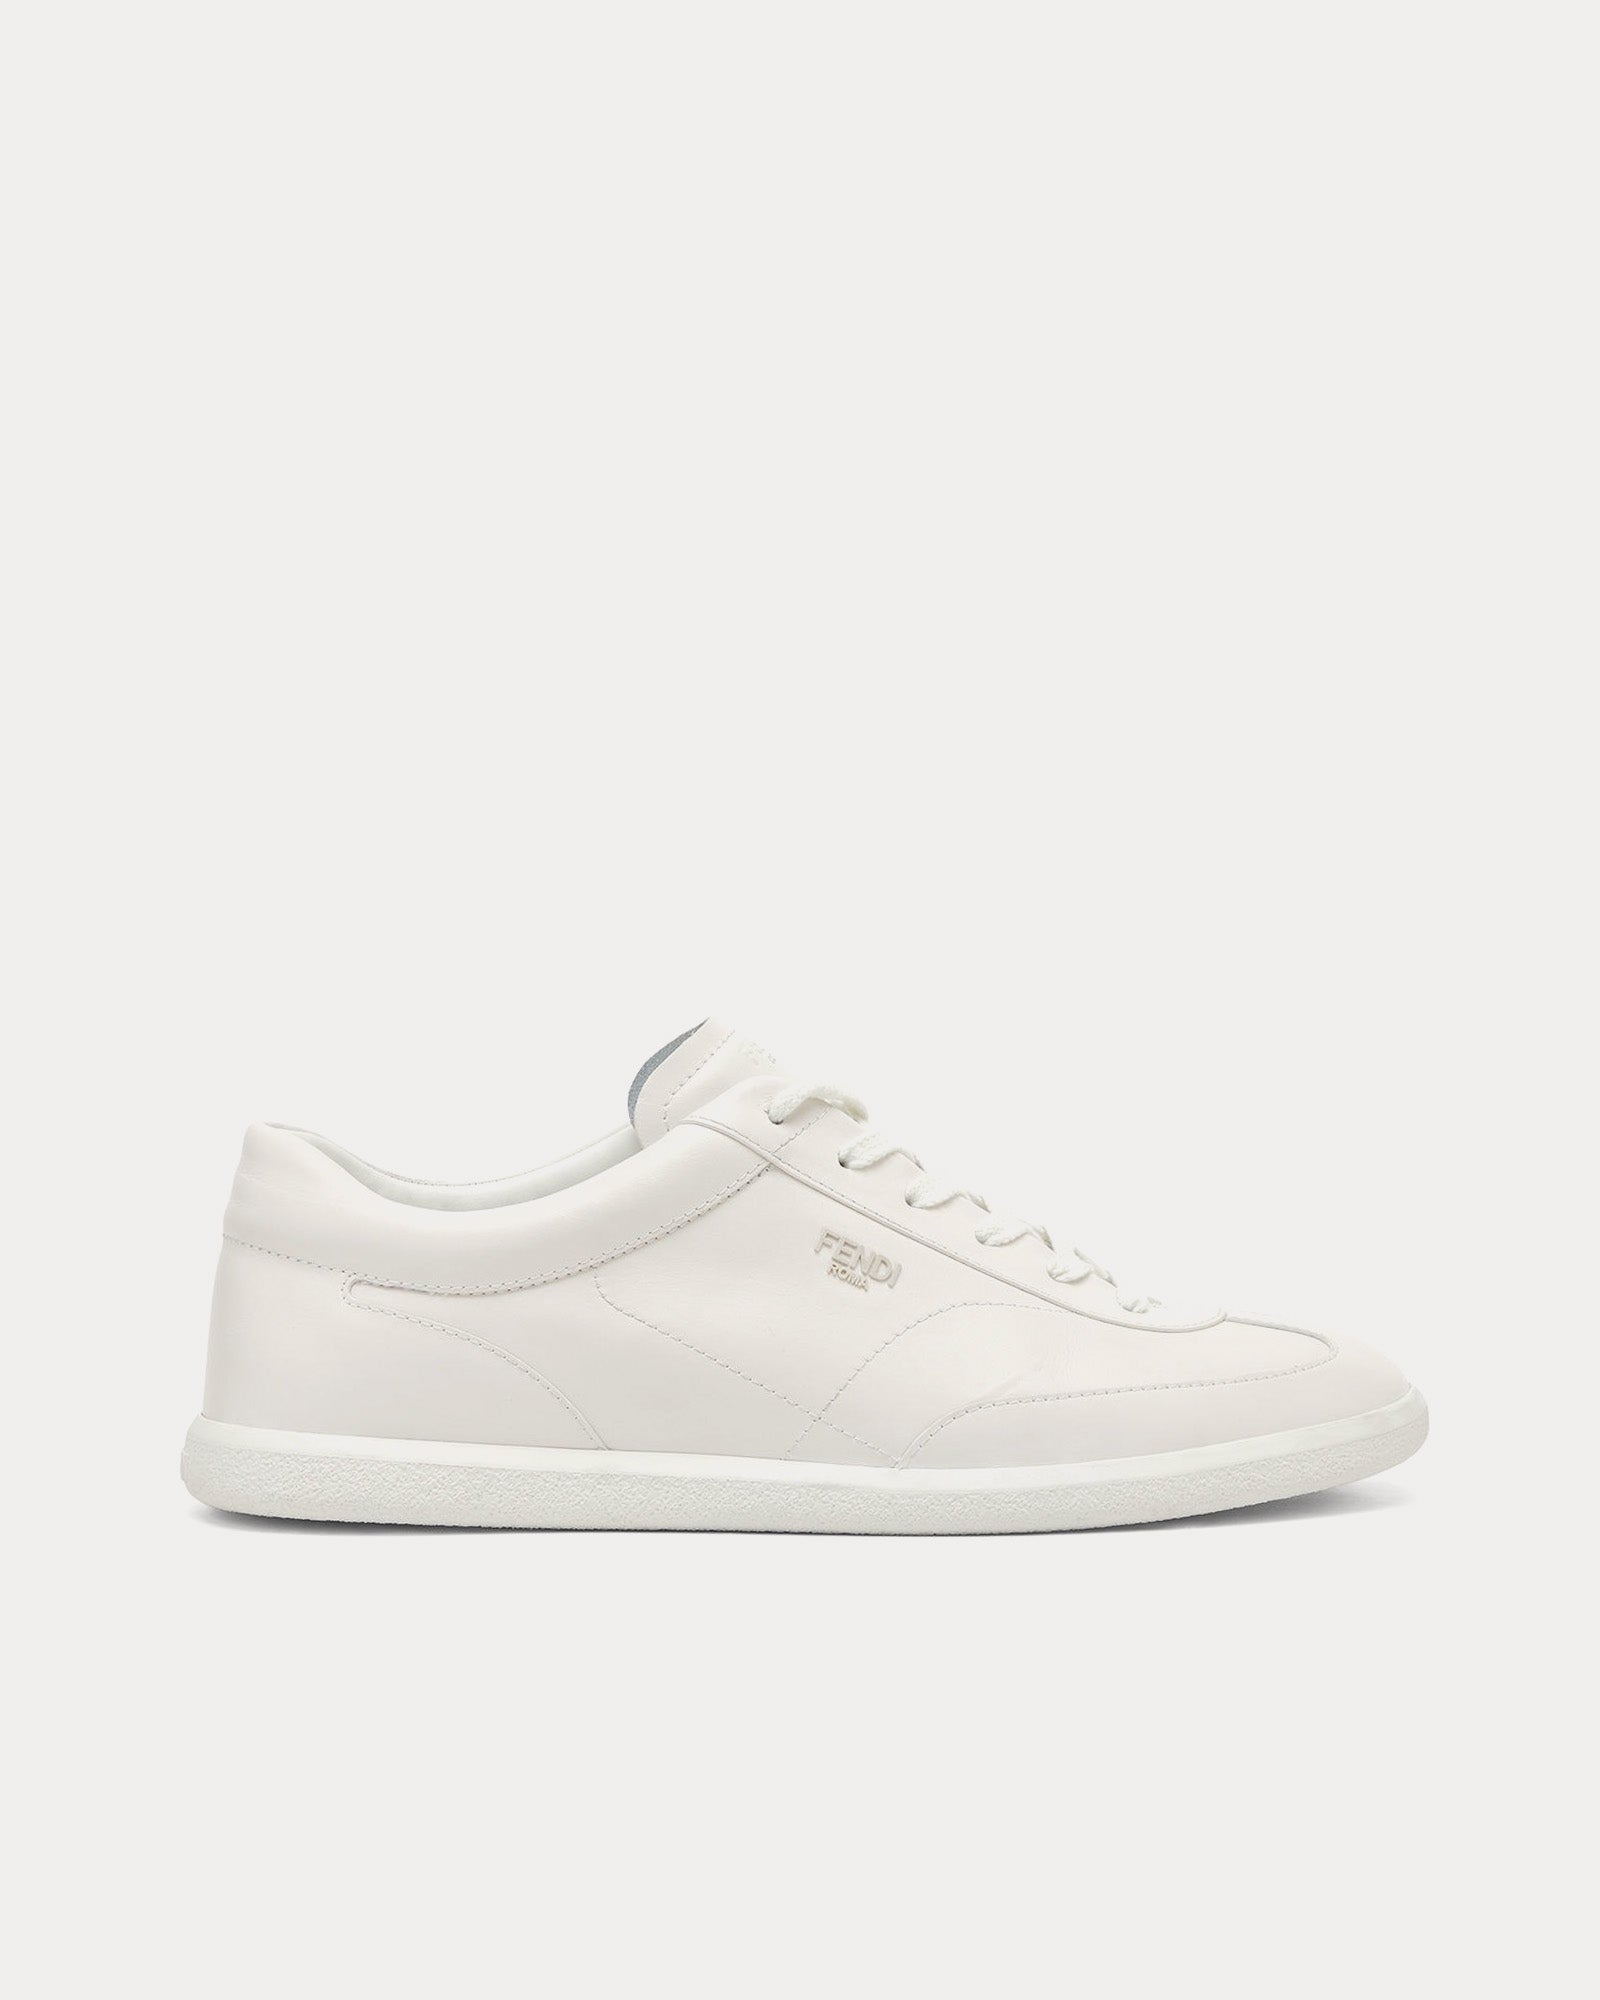 Fendi by Stefano Pilati - Slim Leather White Low Top Sneakers